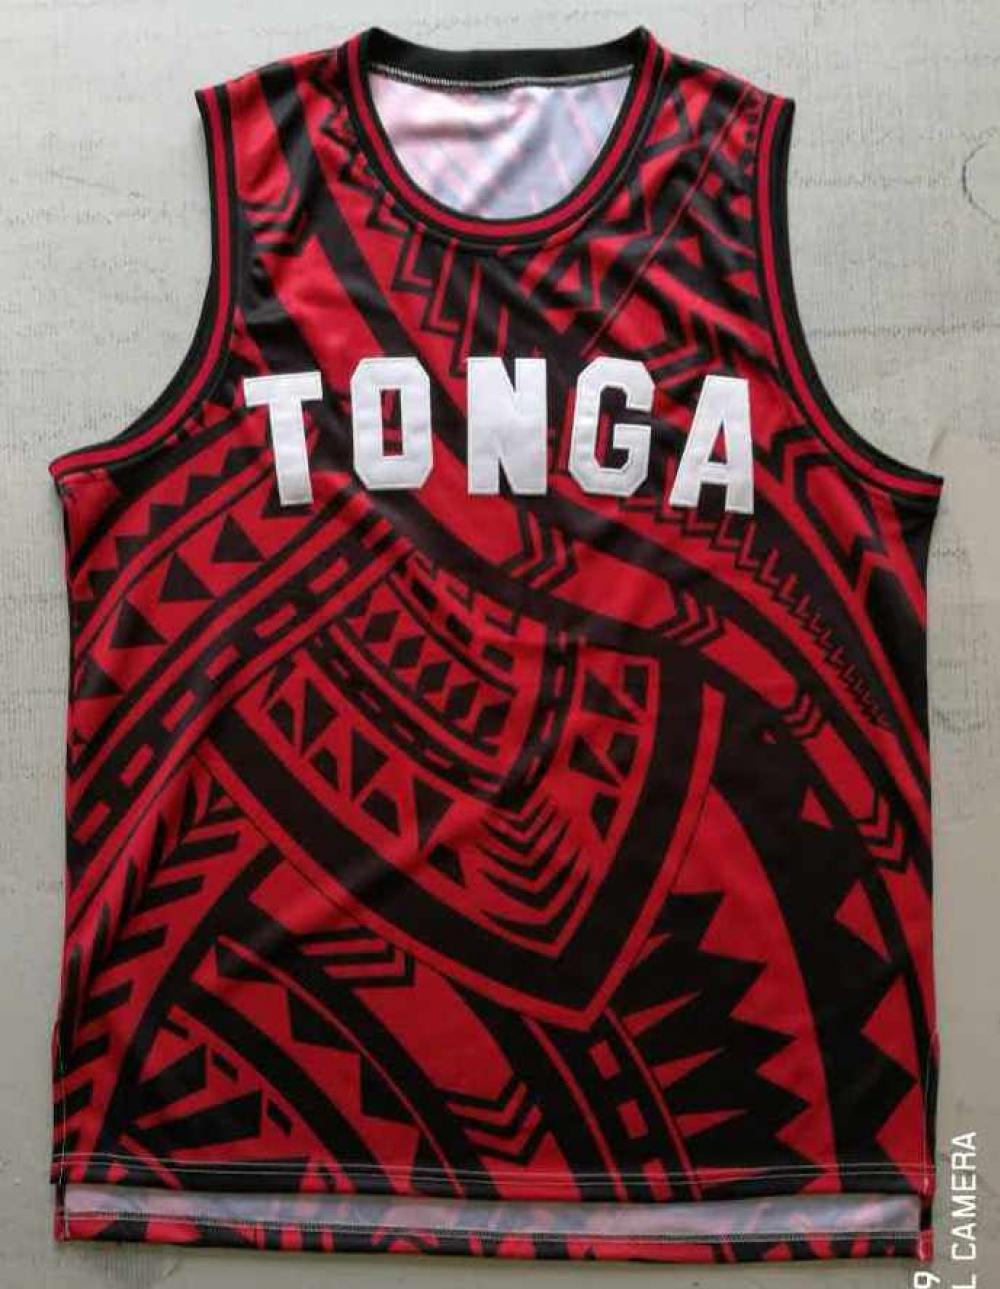 Te Amokura – Tairāwhiti artists behind Warriors indigenous jersey